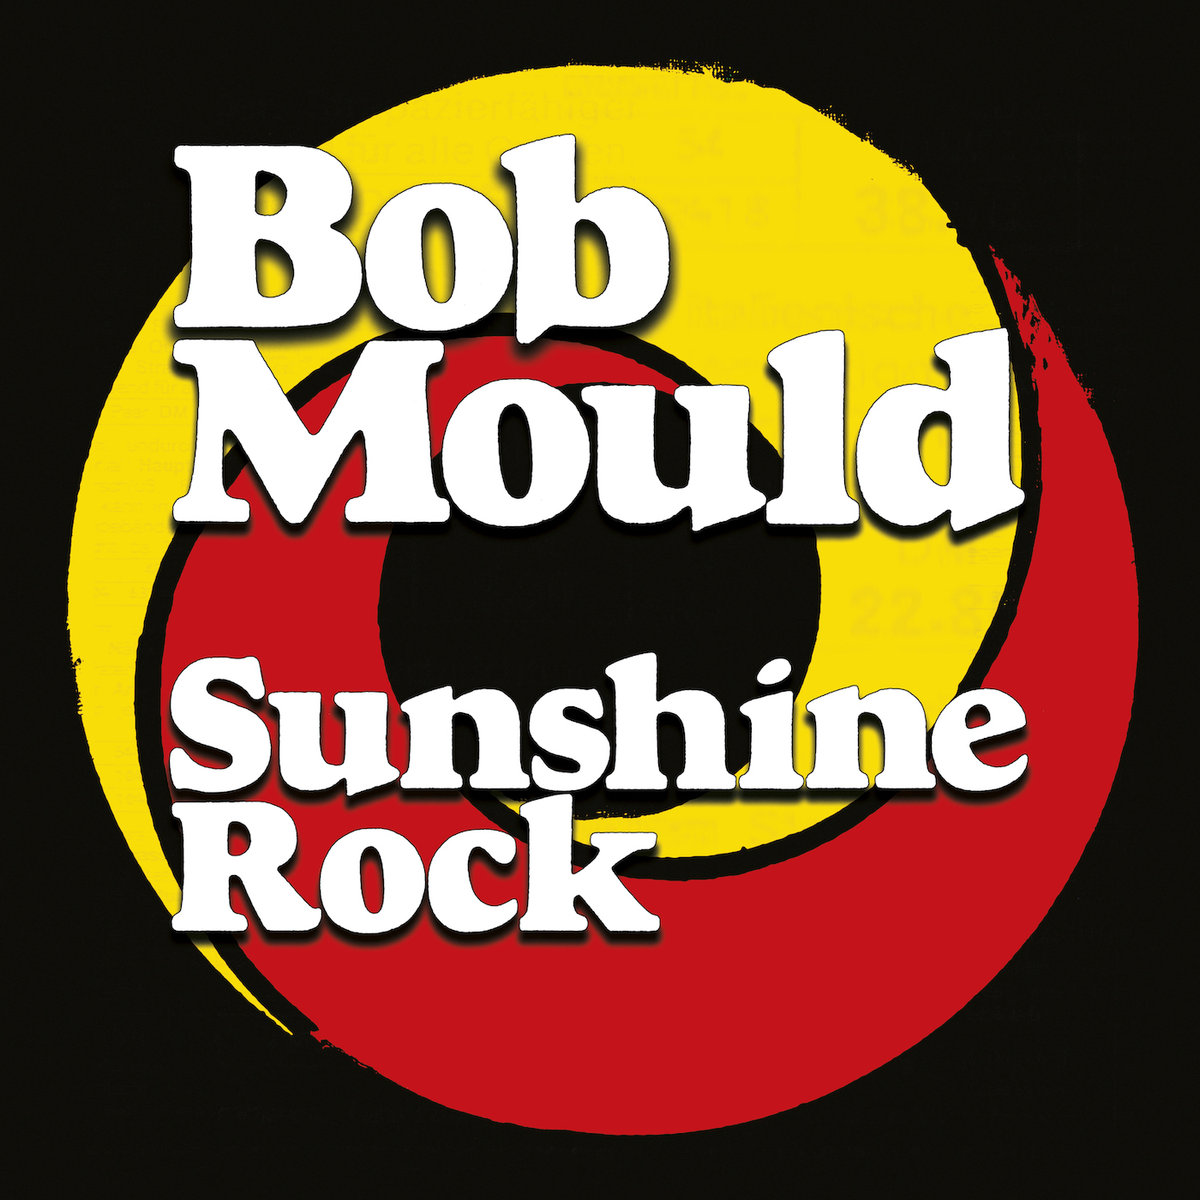 Bob Mould Sunshine Rock